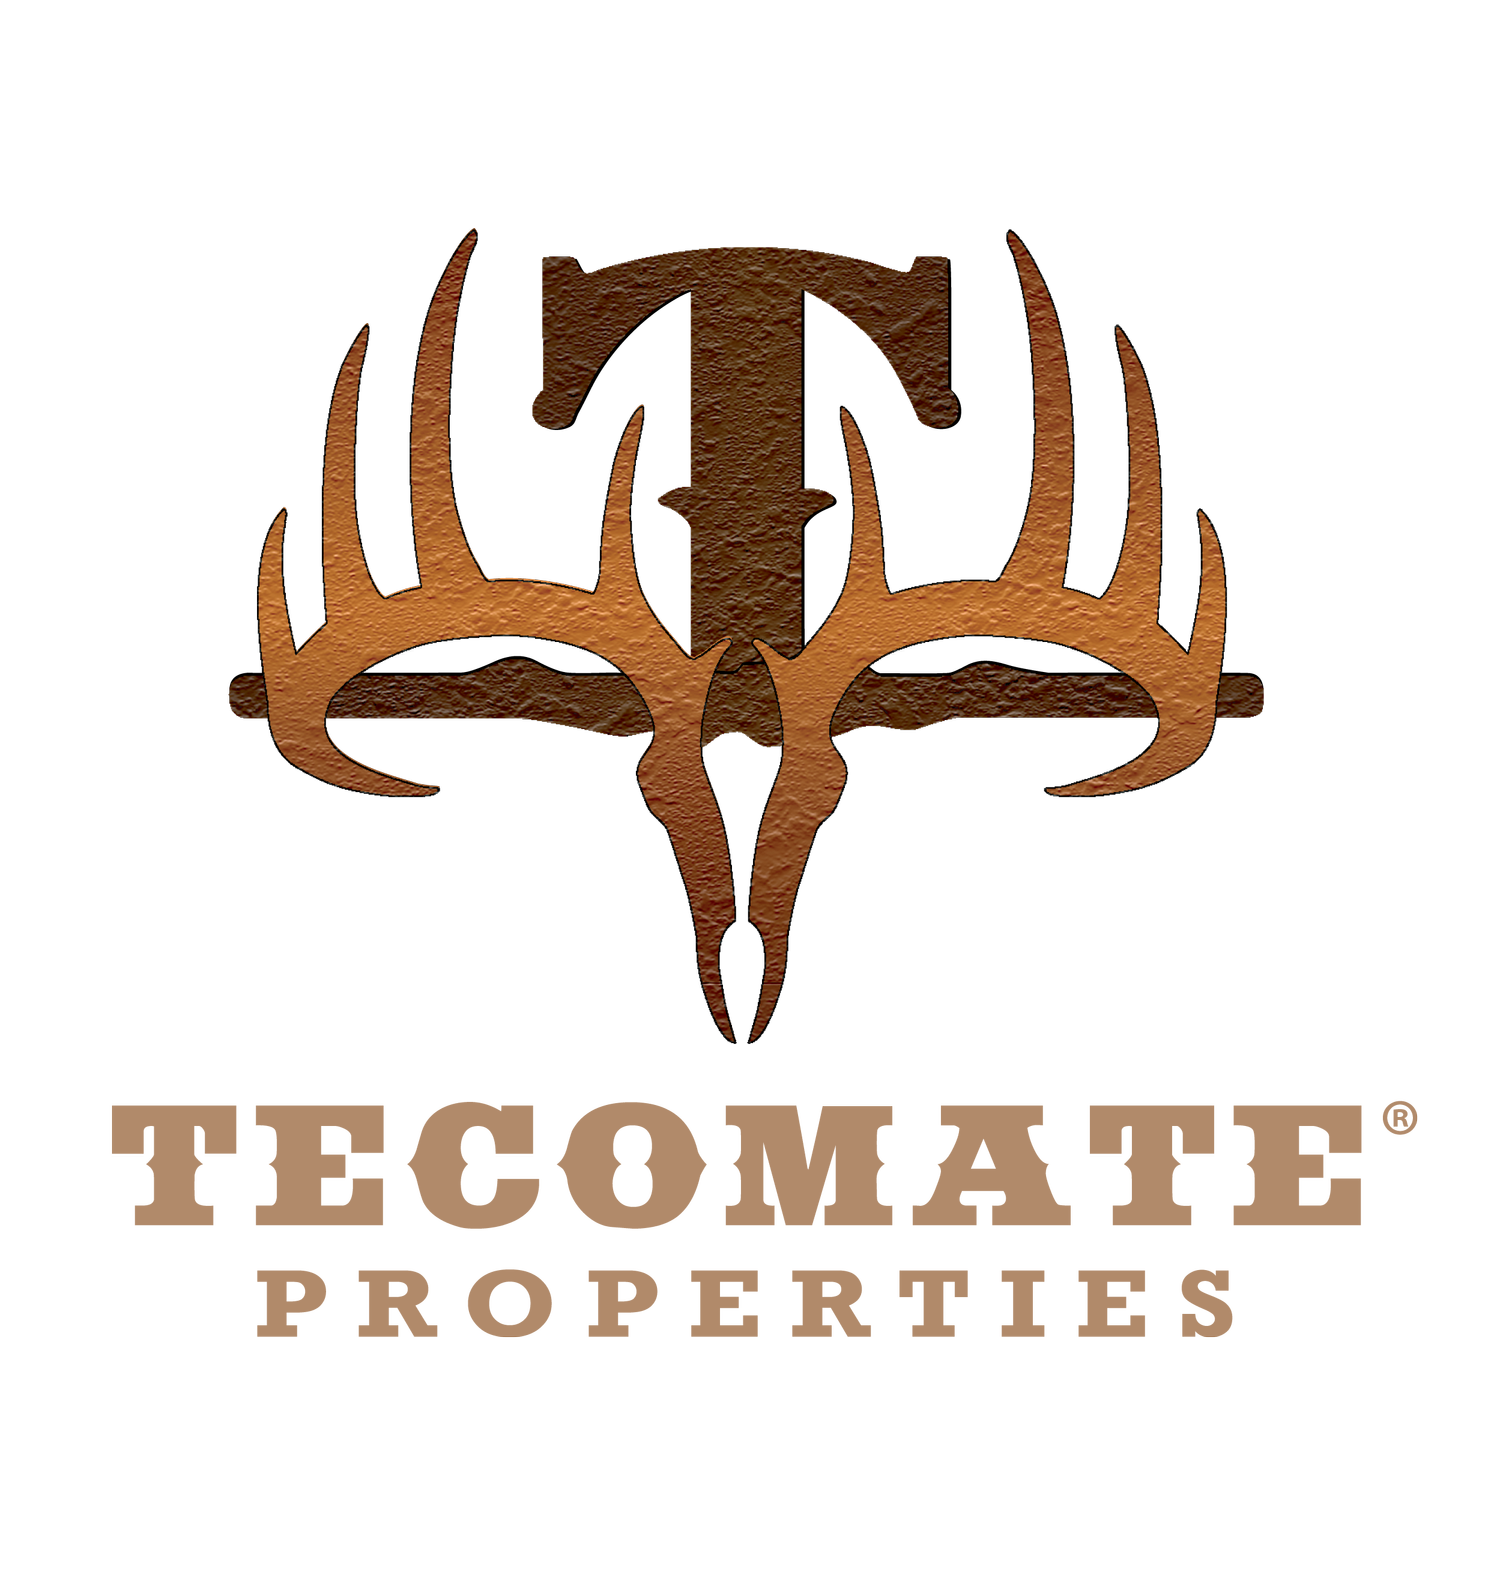 Tecomate Properties